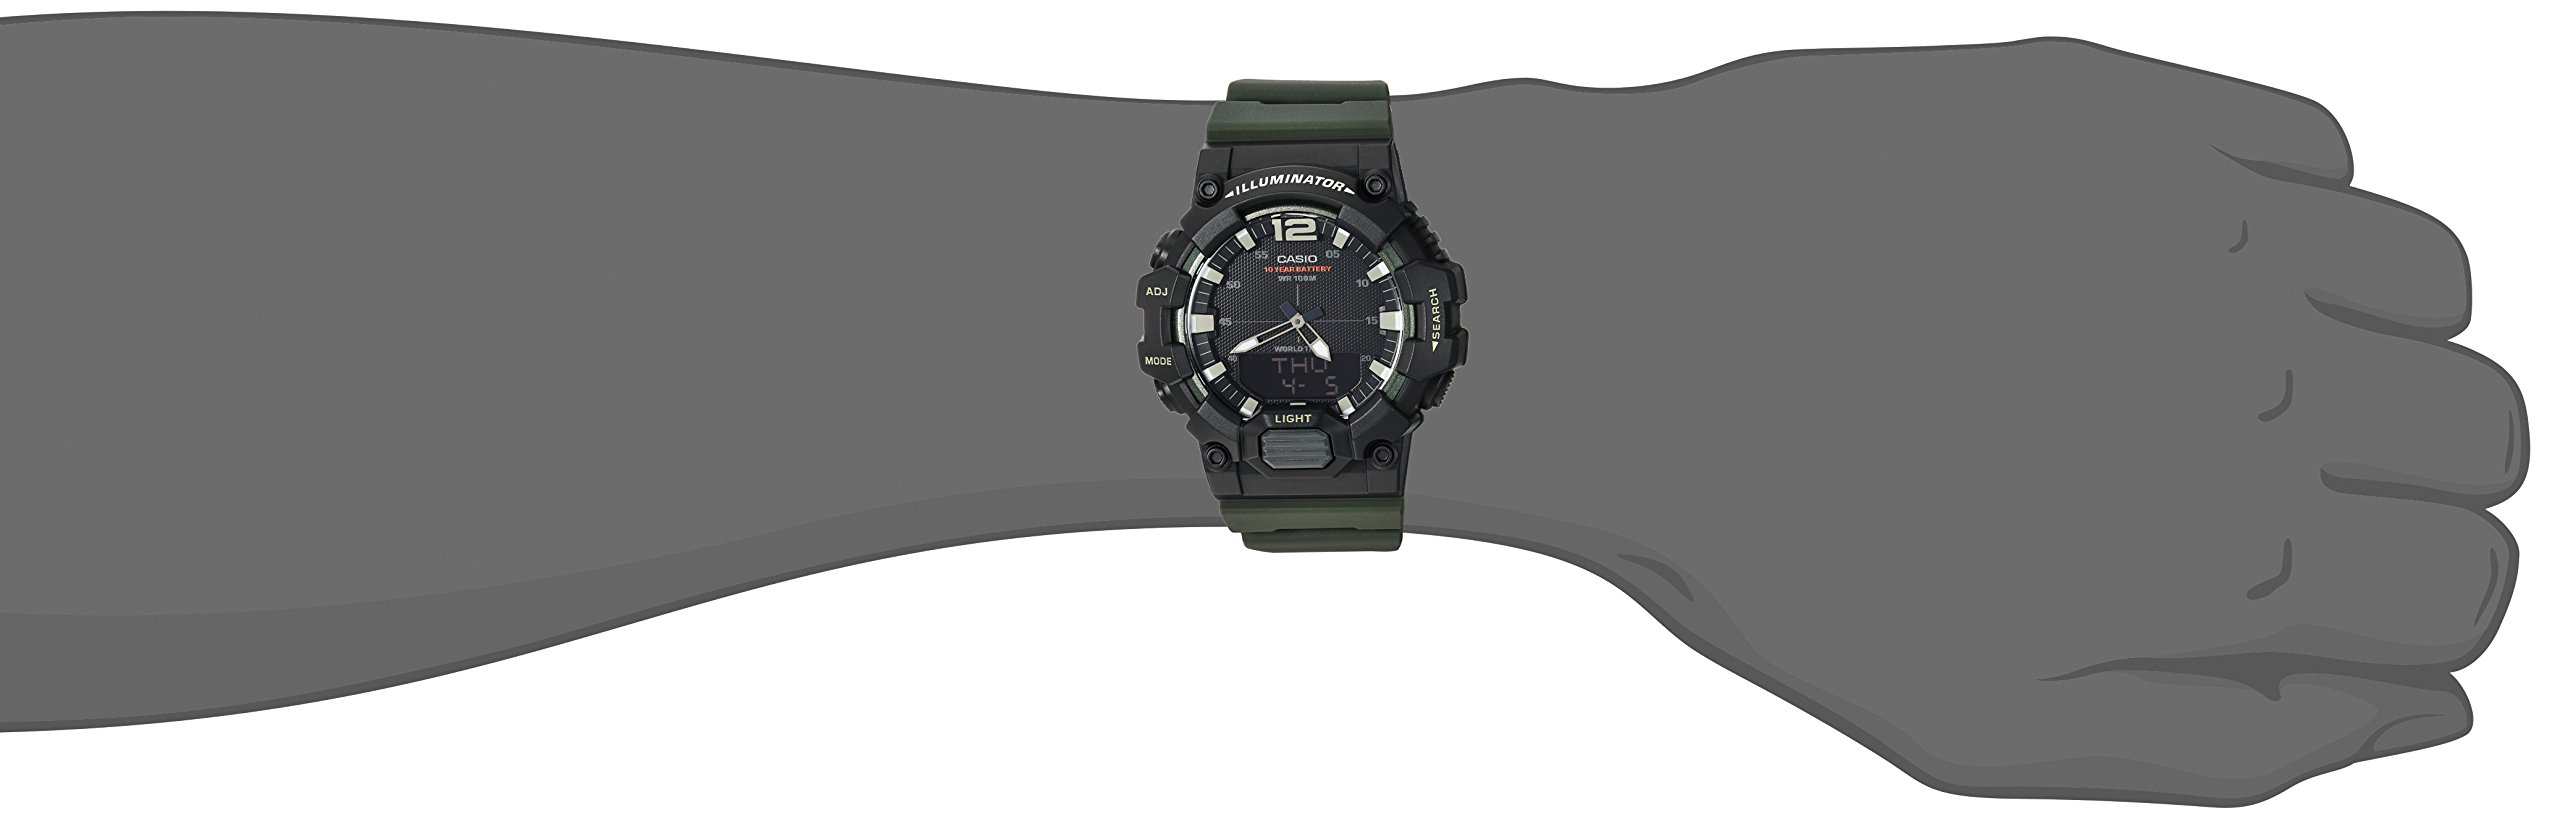 Casio Men's HDC-700-1AVCF Classic Analog-Digital Display Quartz Black Watch